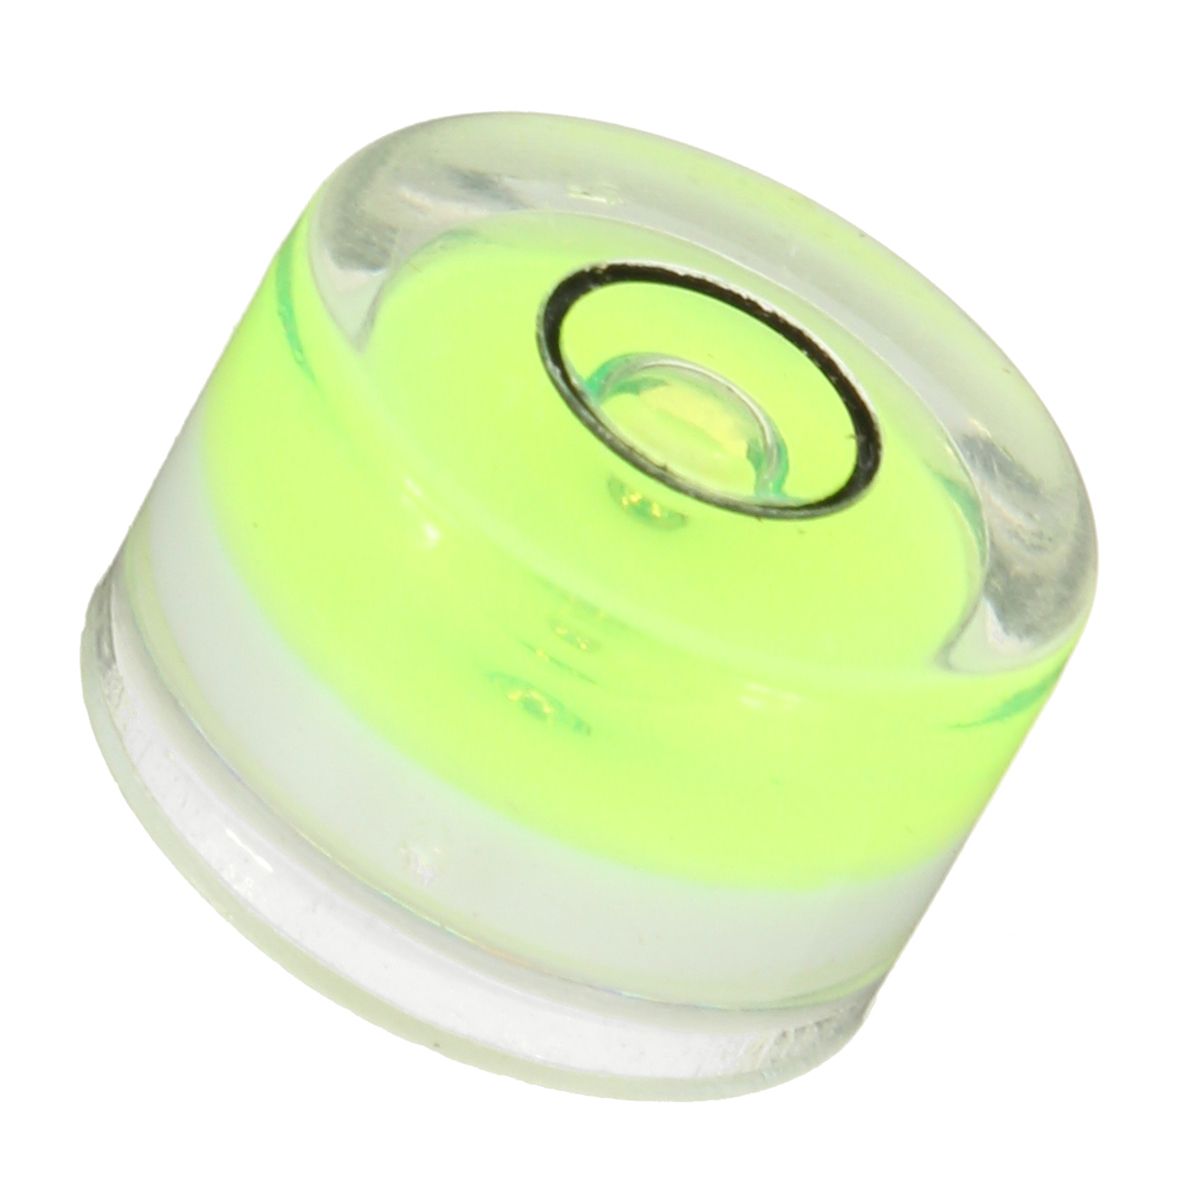 12x7mm-Tiny-Disc-Bubble-Spirit-Level-Round-Circle-Circular-Green-Tripod-1318440